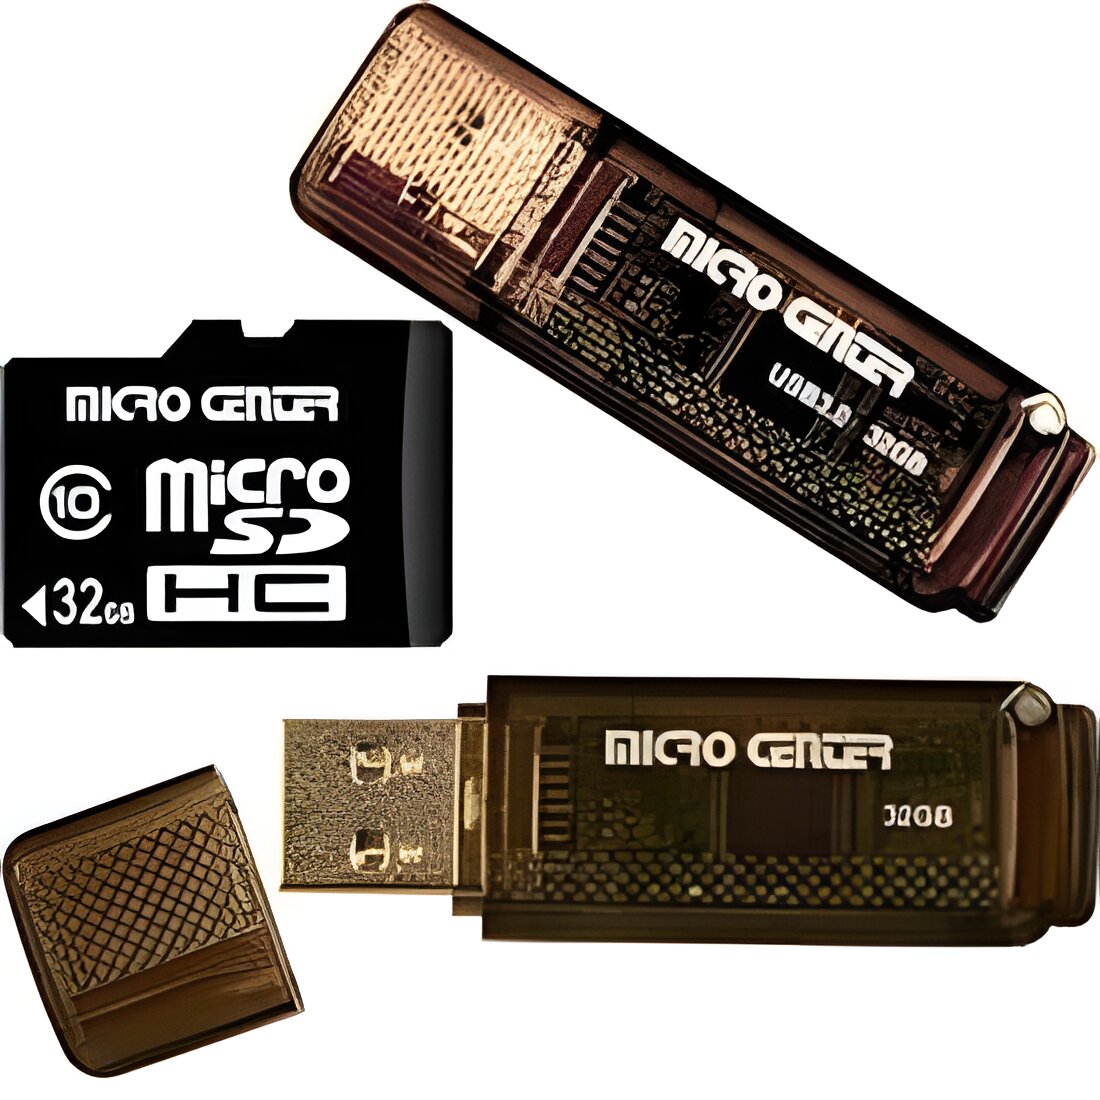 Free Micro Center 32GB MicroSD & Flash Drive